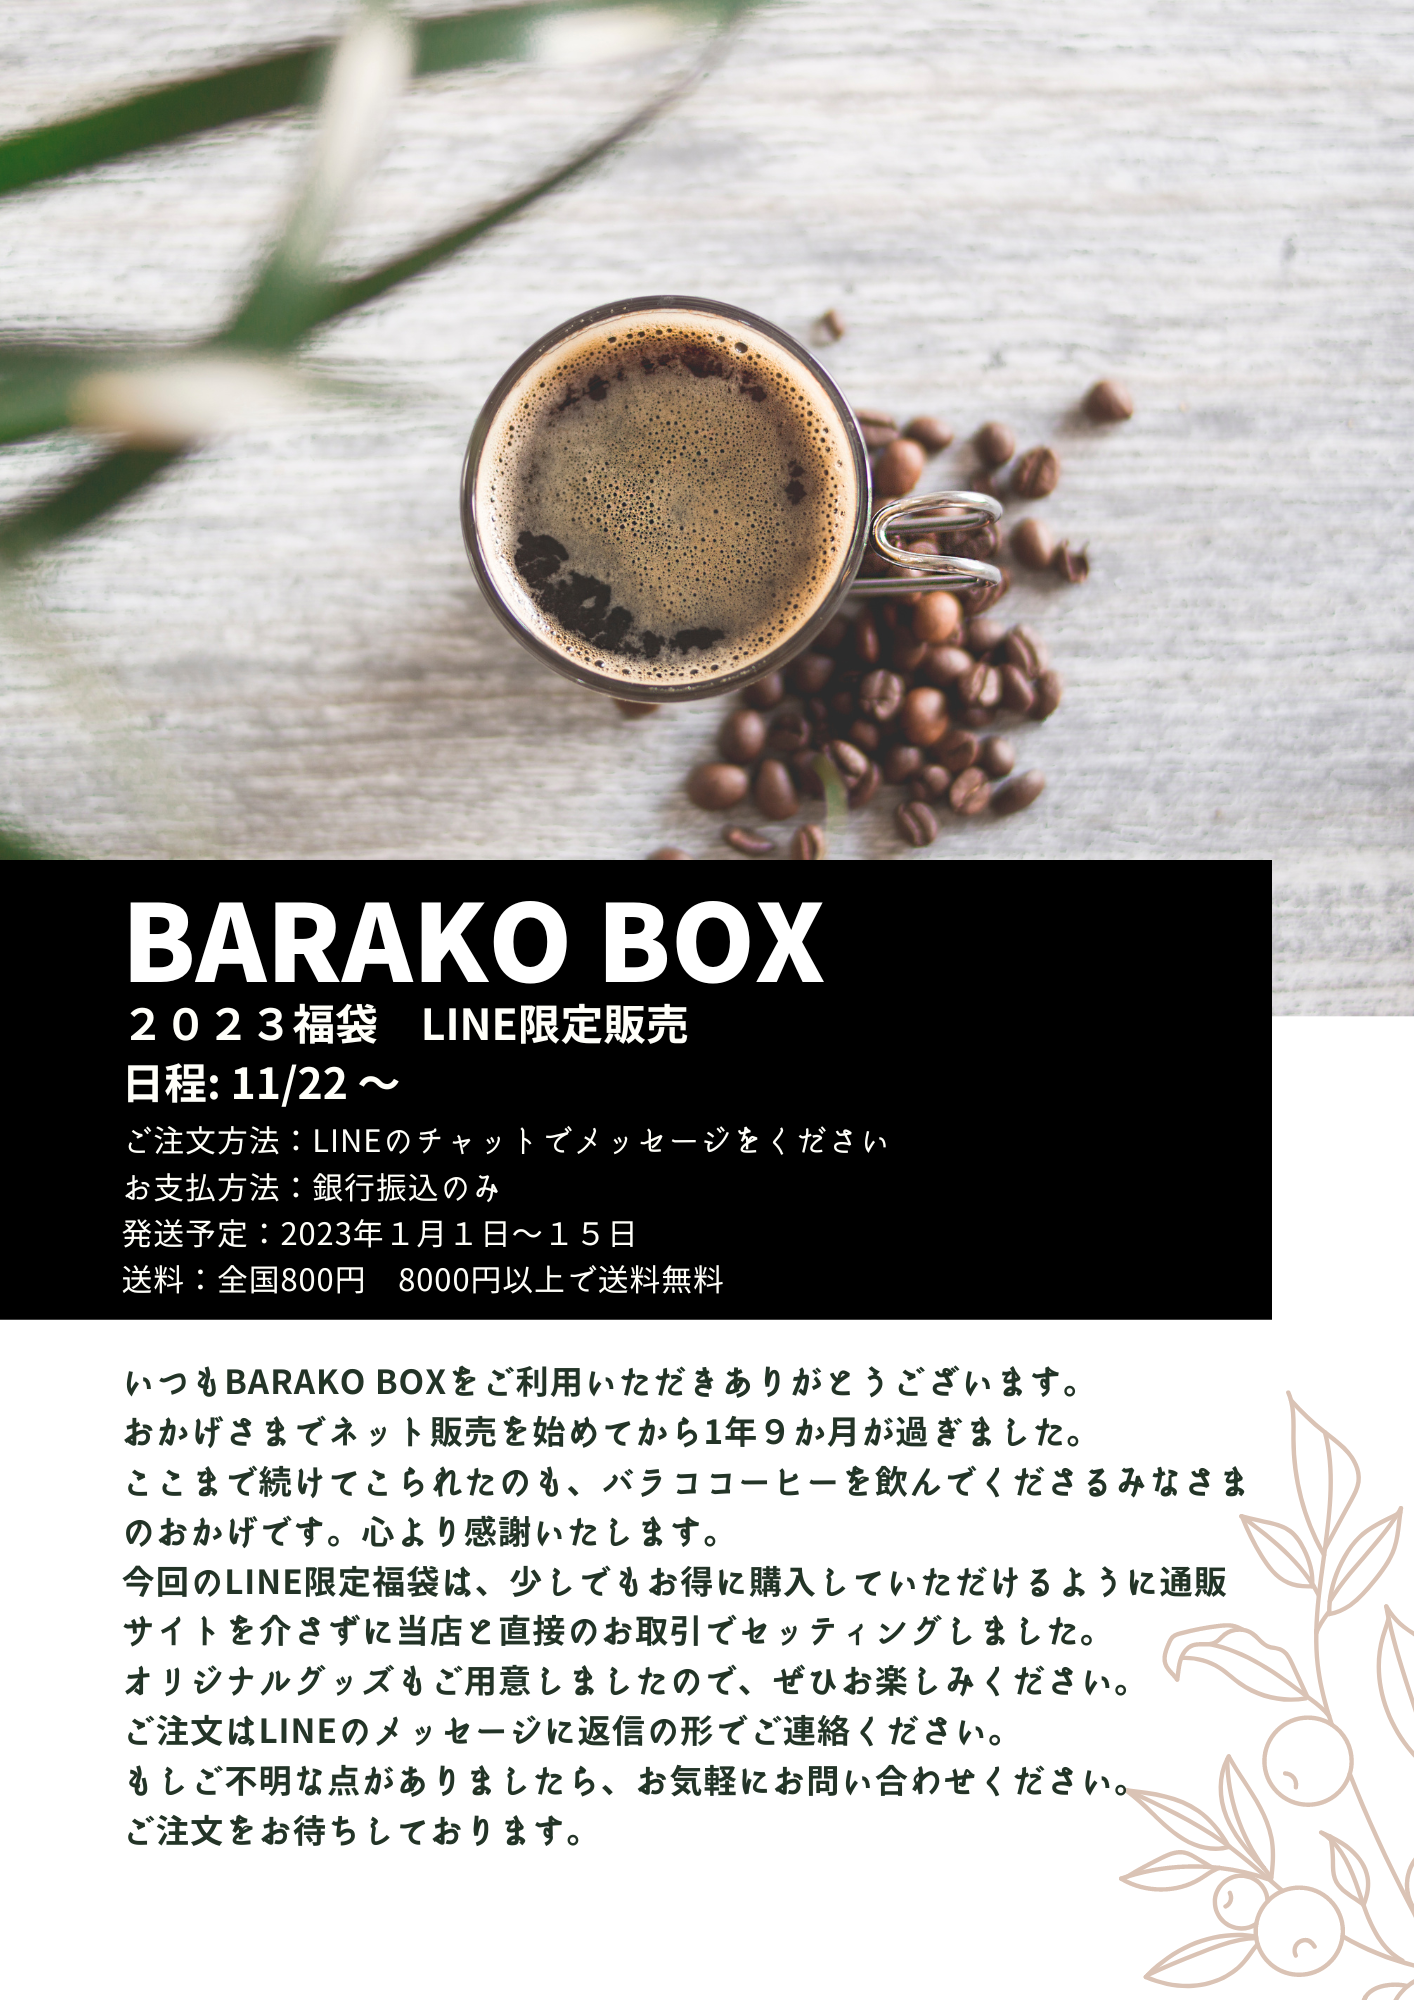 【LINE限定】2023BARAKO BOX福袋！早割は11月25日まで。